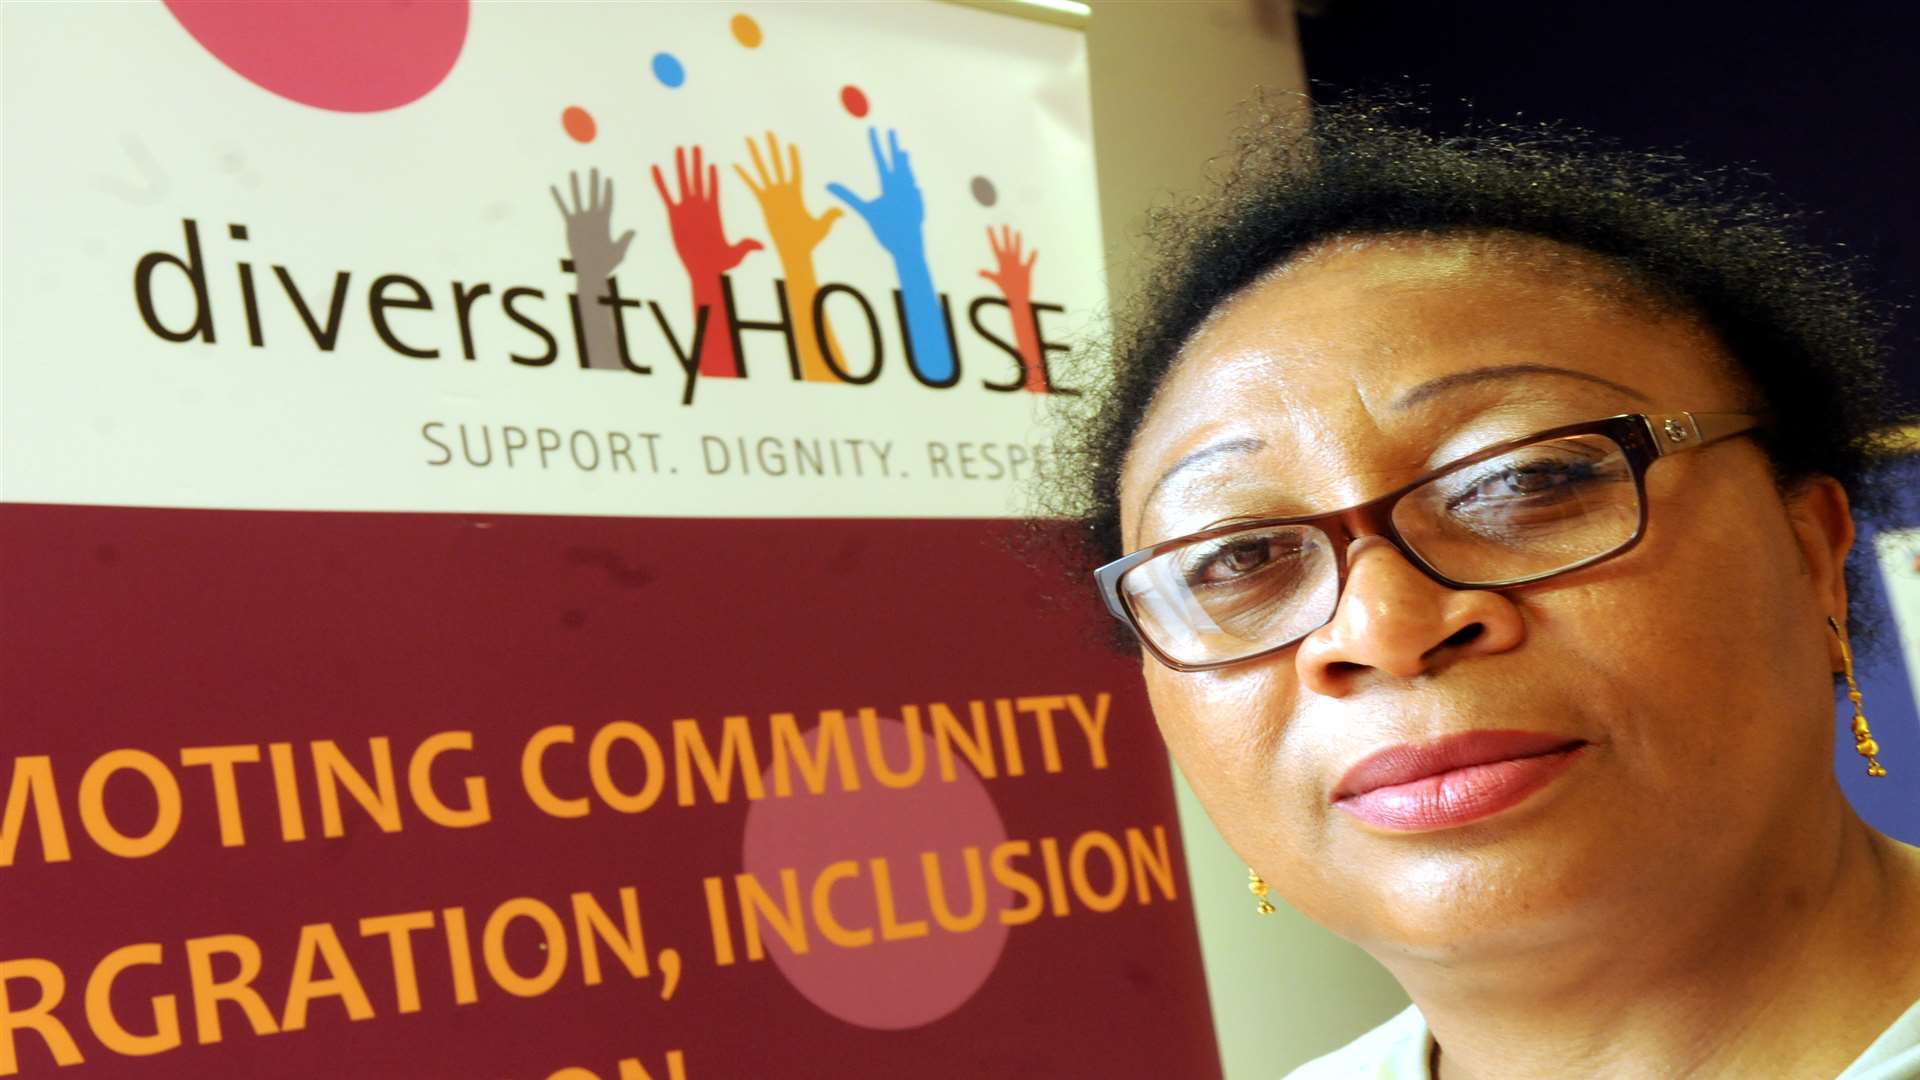 Christine Locke, chairman of Diversity House